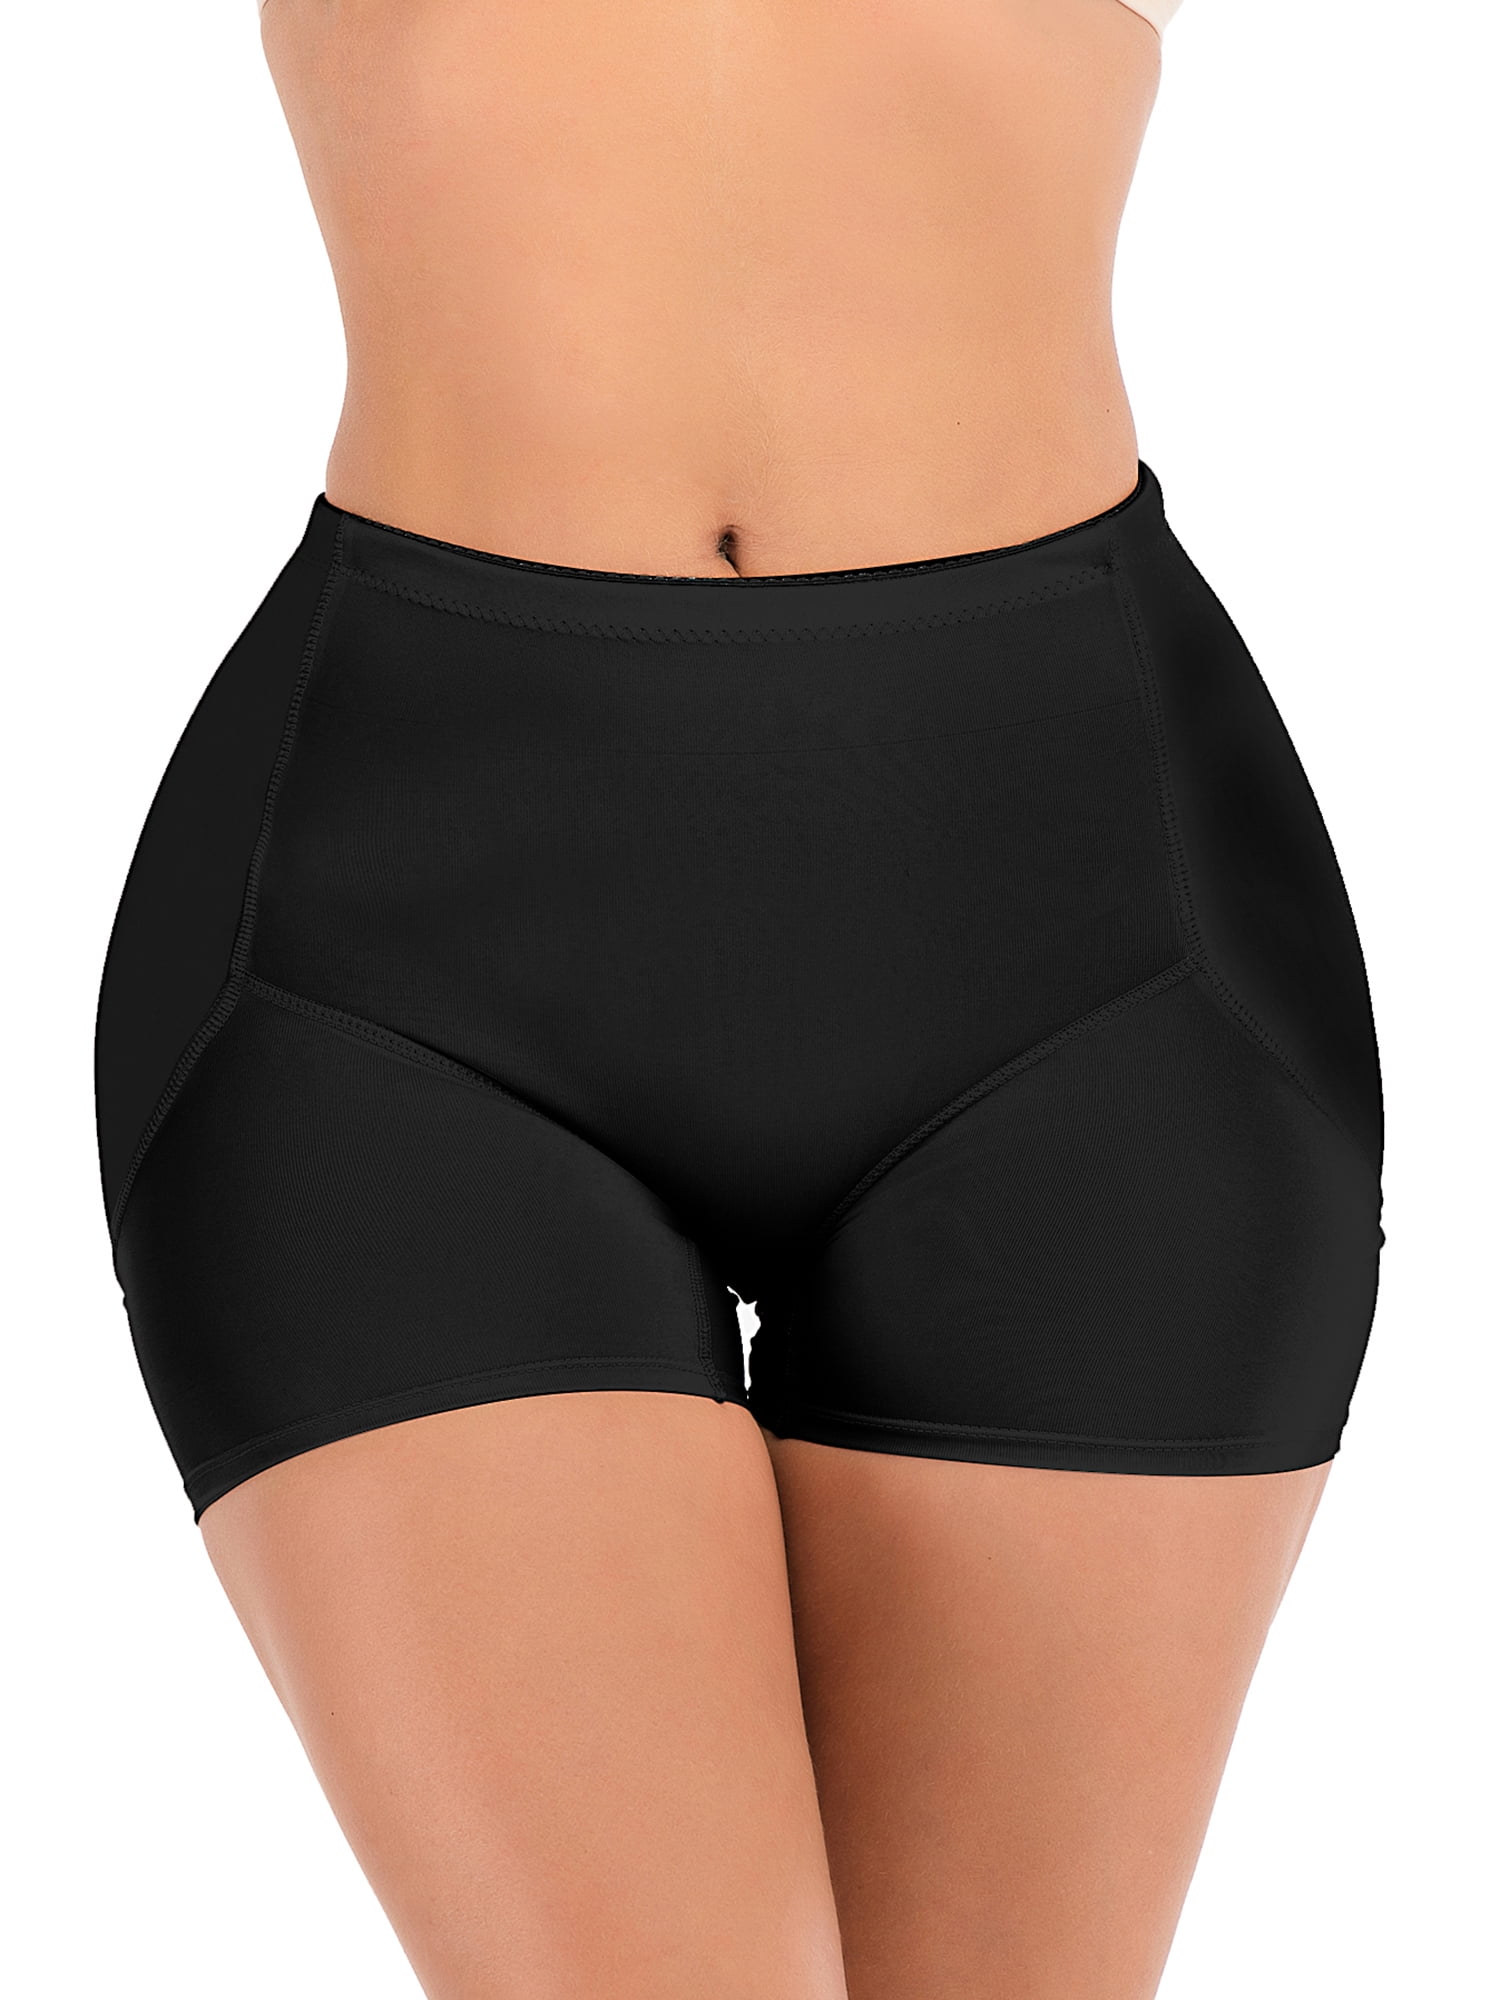 Buy Scizor Butt Lifter Shapewear Padded Underwear Women Butt Hip Enhancer  Shaper Seamless Fake Butt Panties Pads (L) Multicolour at Amazon.in